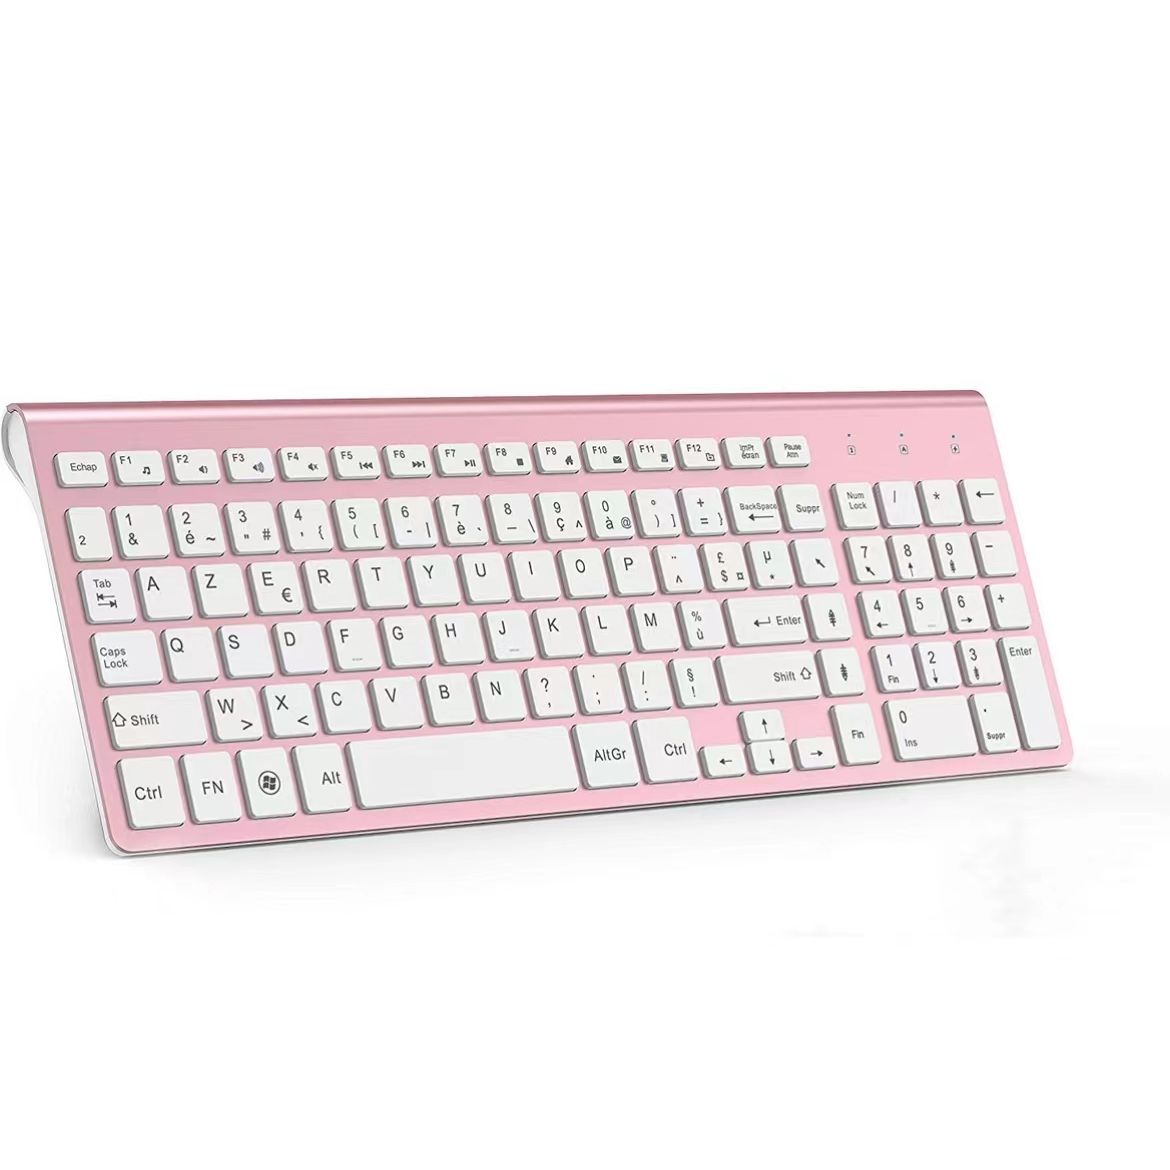 Wireless Keyboard (AZERTY) 2.4Ghz Ultra-Thin Keyboard, Portable Silent 2400 DPI Ergonomic French Keyboard for PC Laptop TV- Pink